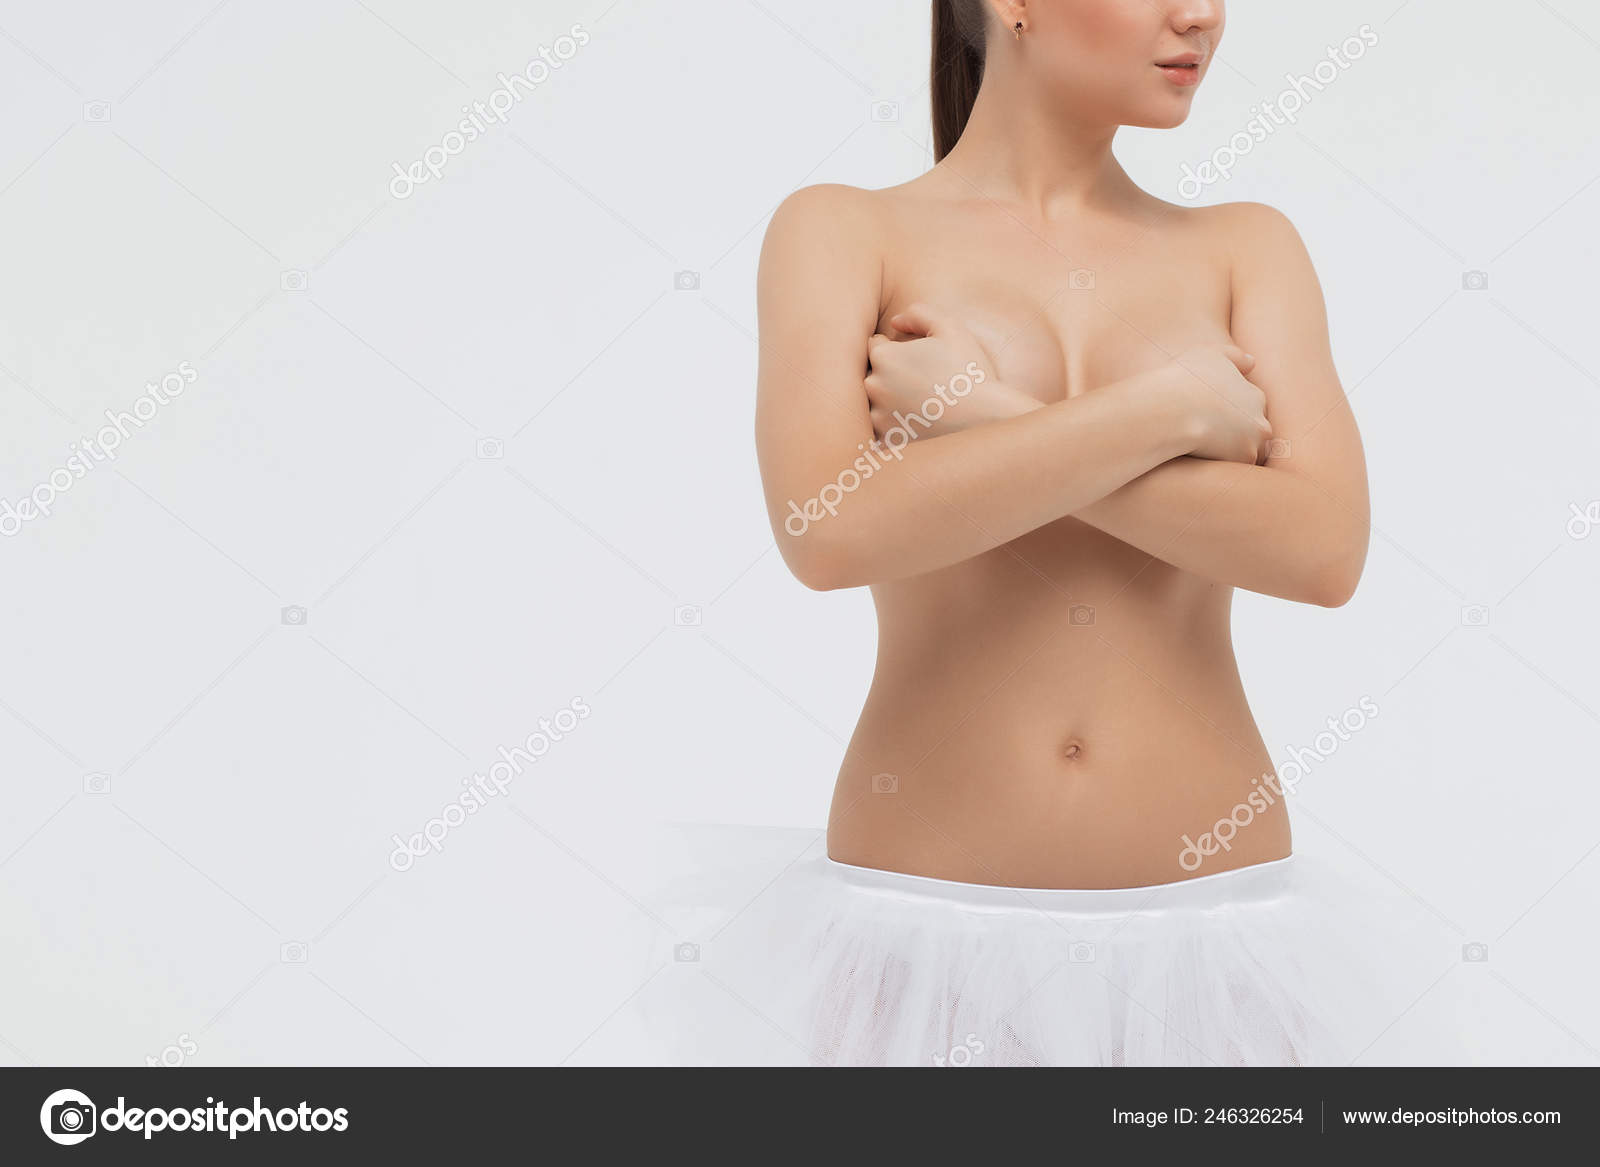 dima samsonov reccomend beautiful slim naked women pic